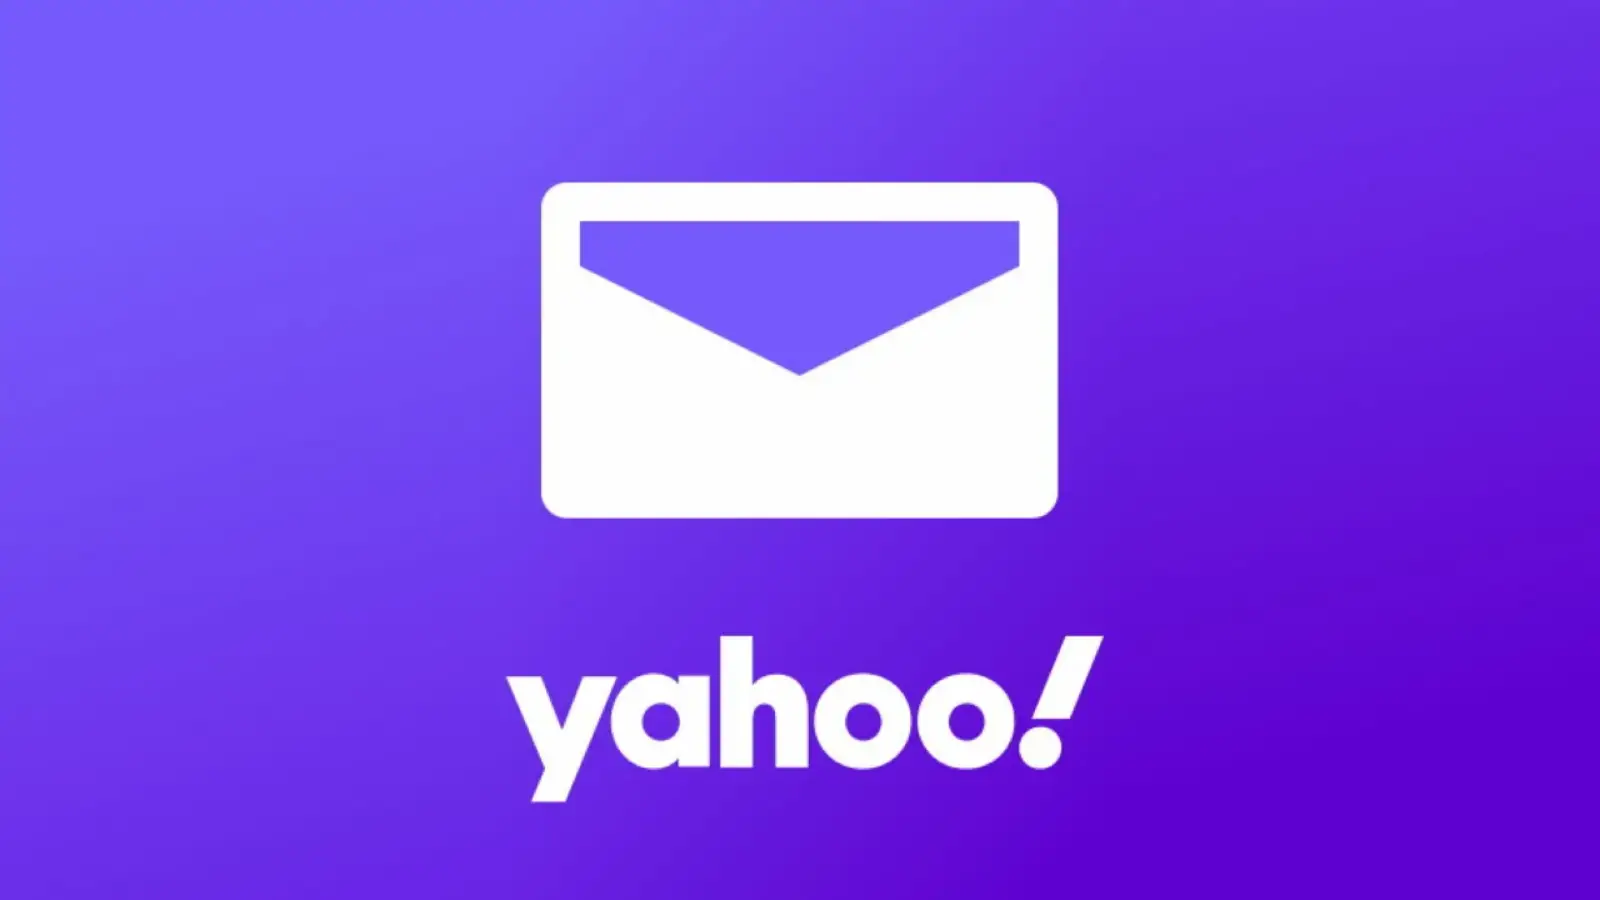 Yahoo! Mail Update aduce Schimbari foarte Mari in Telefoane, Tablete